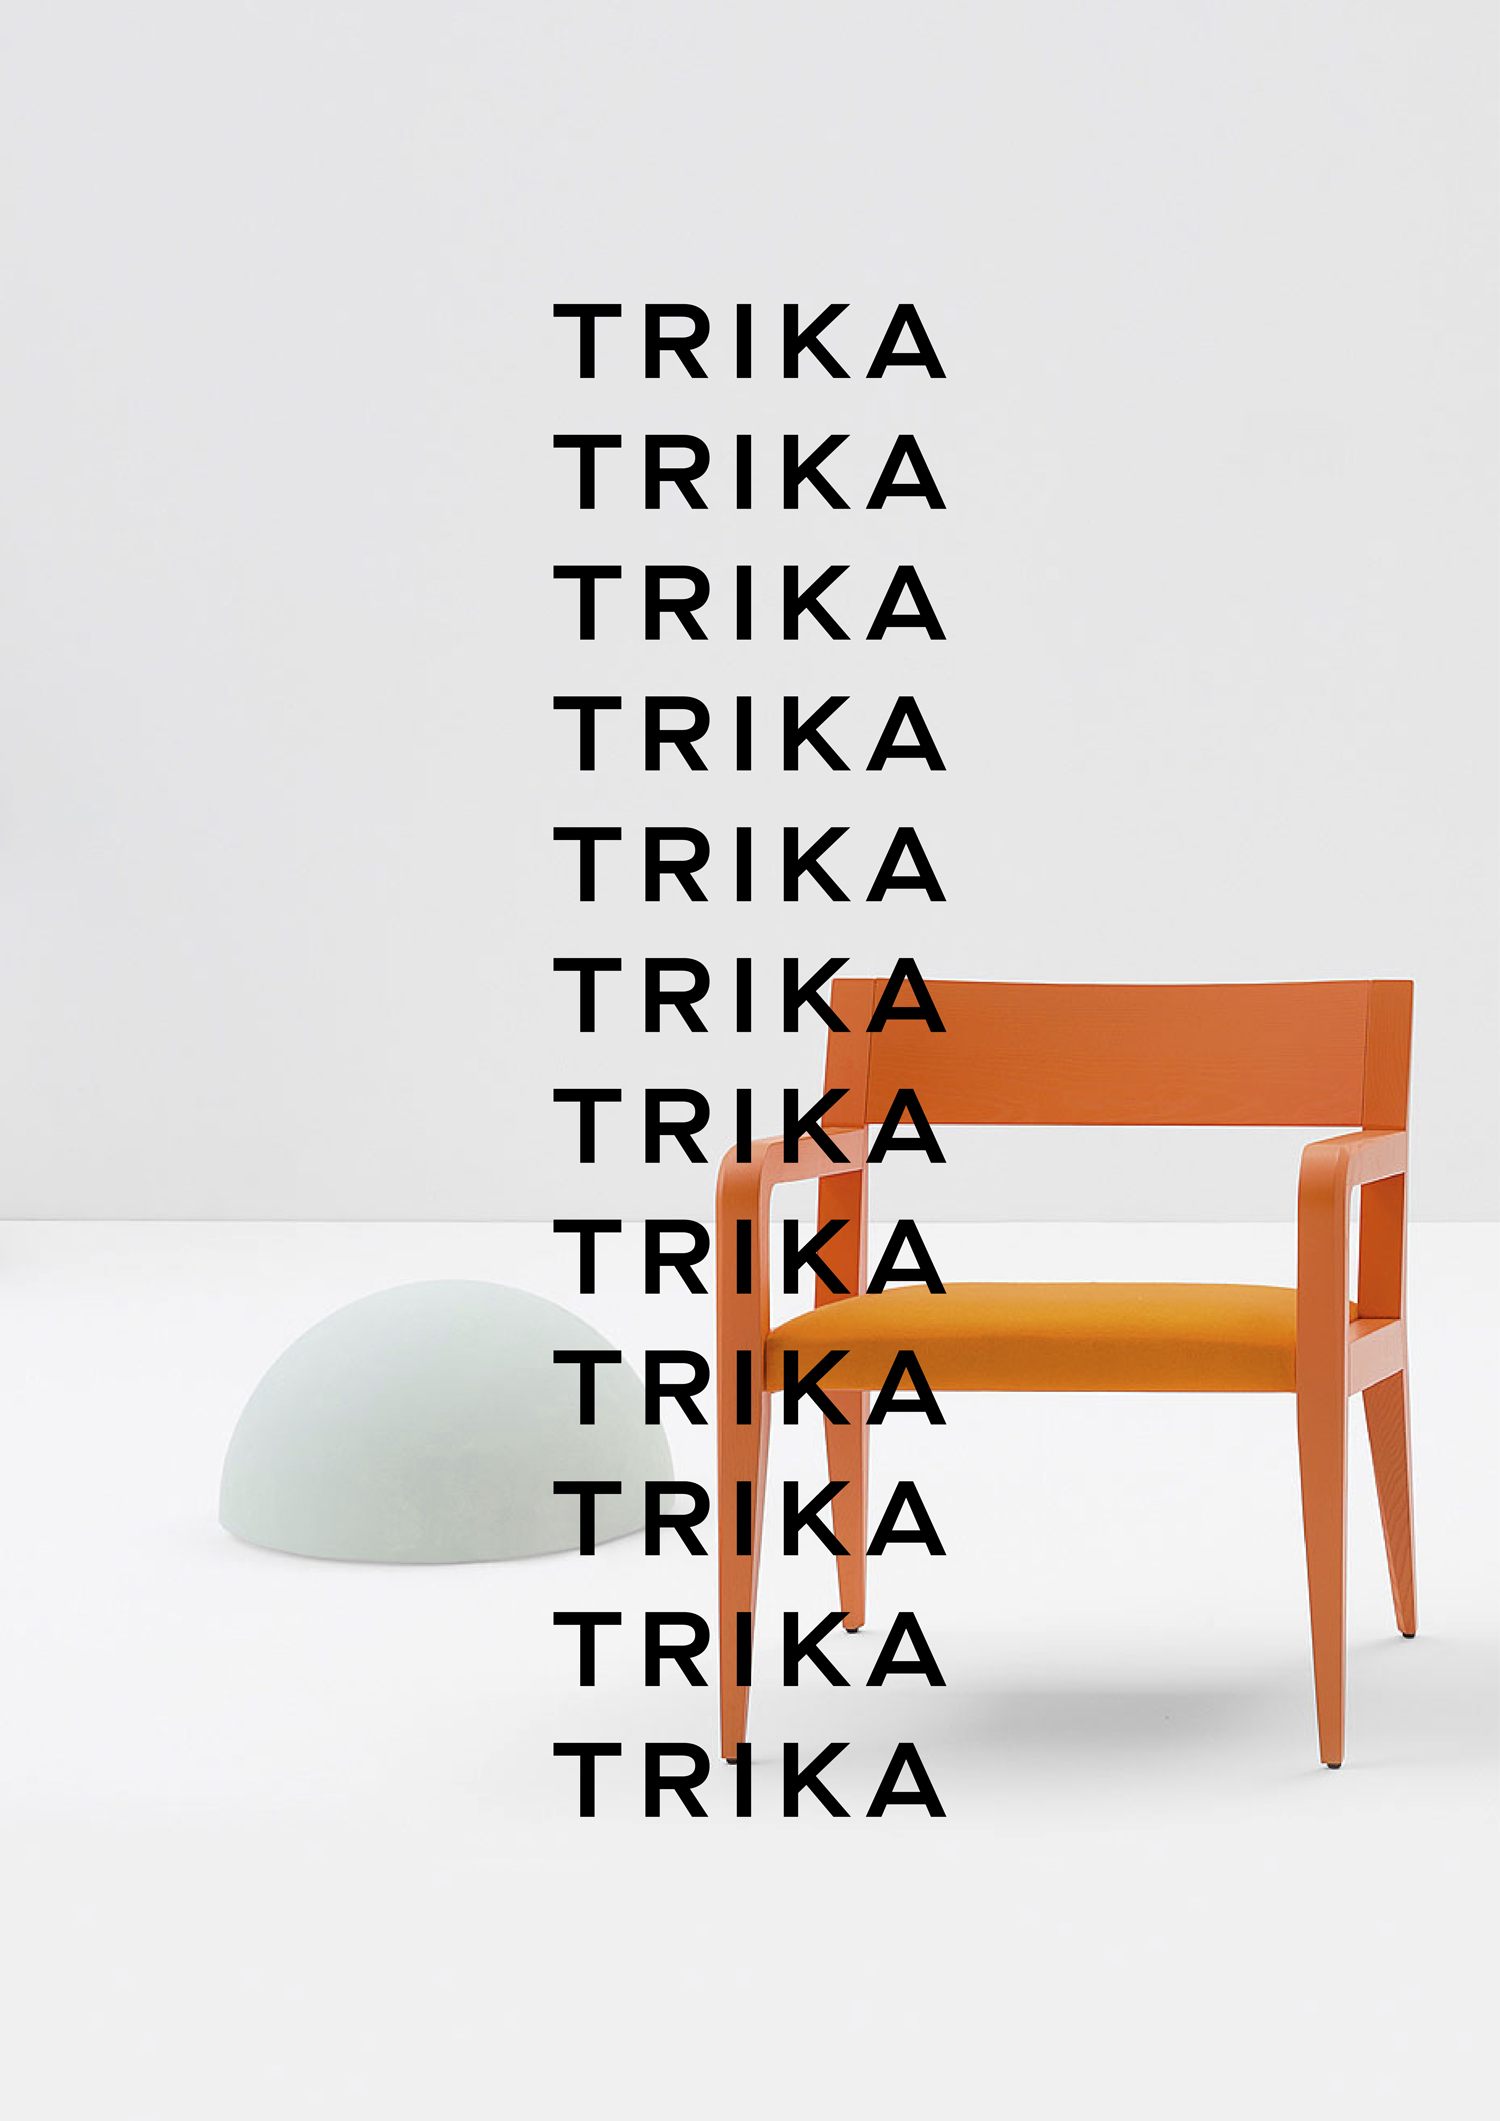 Brand identity by UK design studio Bunch for Croatian interior design business Trika